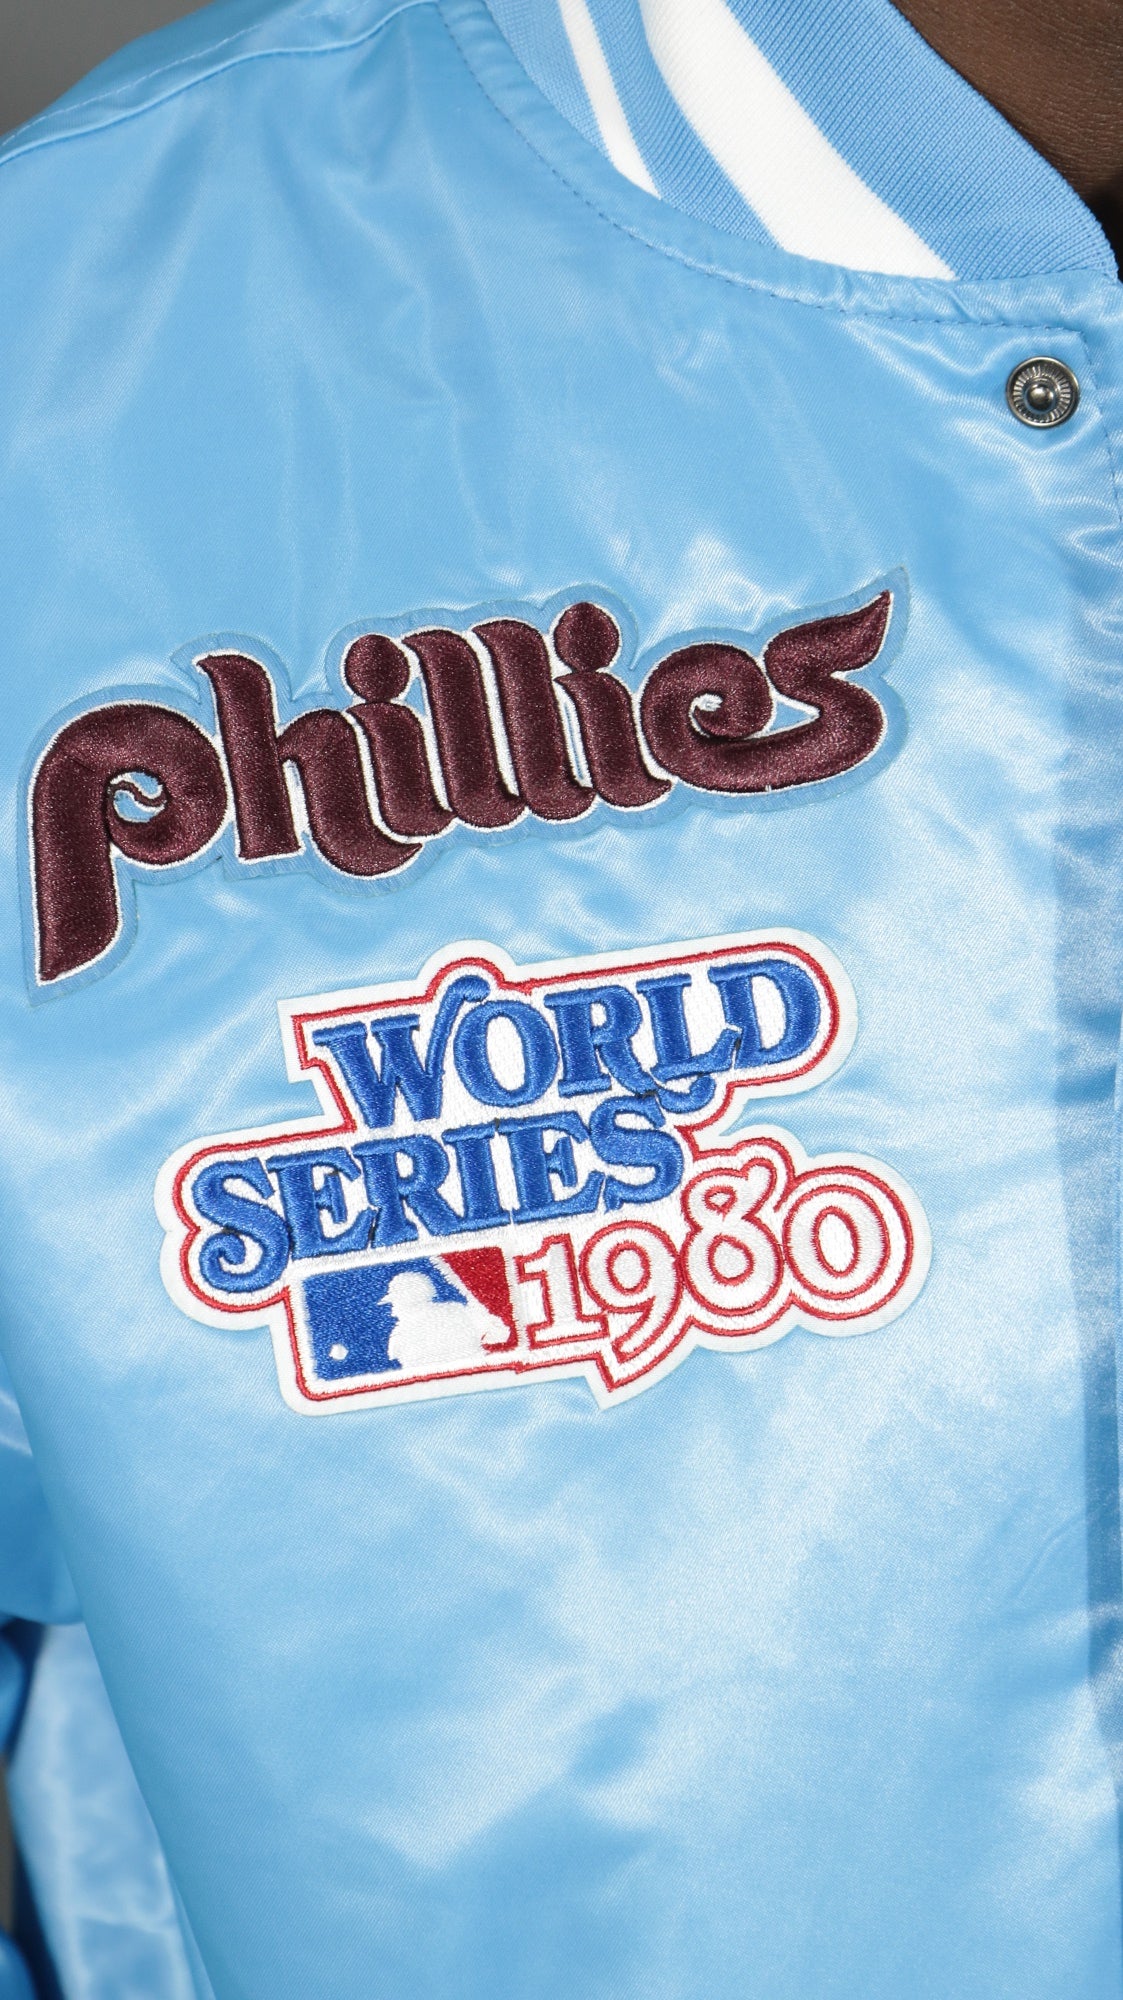 phillies 1980 world series patch on the Philadelphia Phillies Cooperstown Phillies City Hall Logo 1980 World Series Patch Retro Classic Rib | University Blue Satin Varsity Jacket